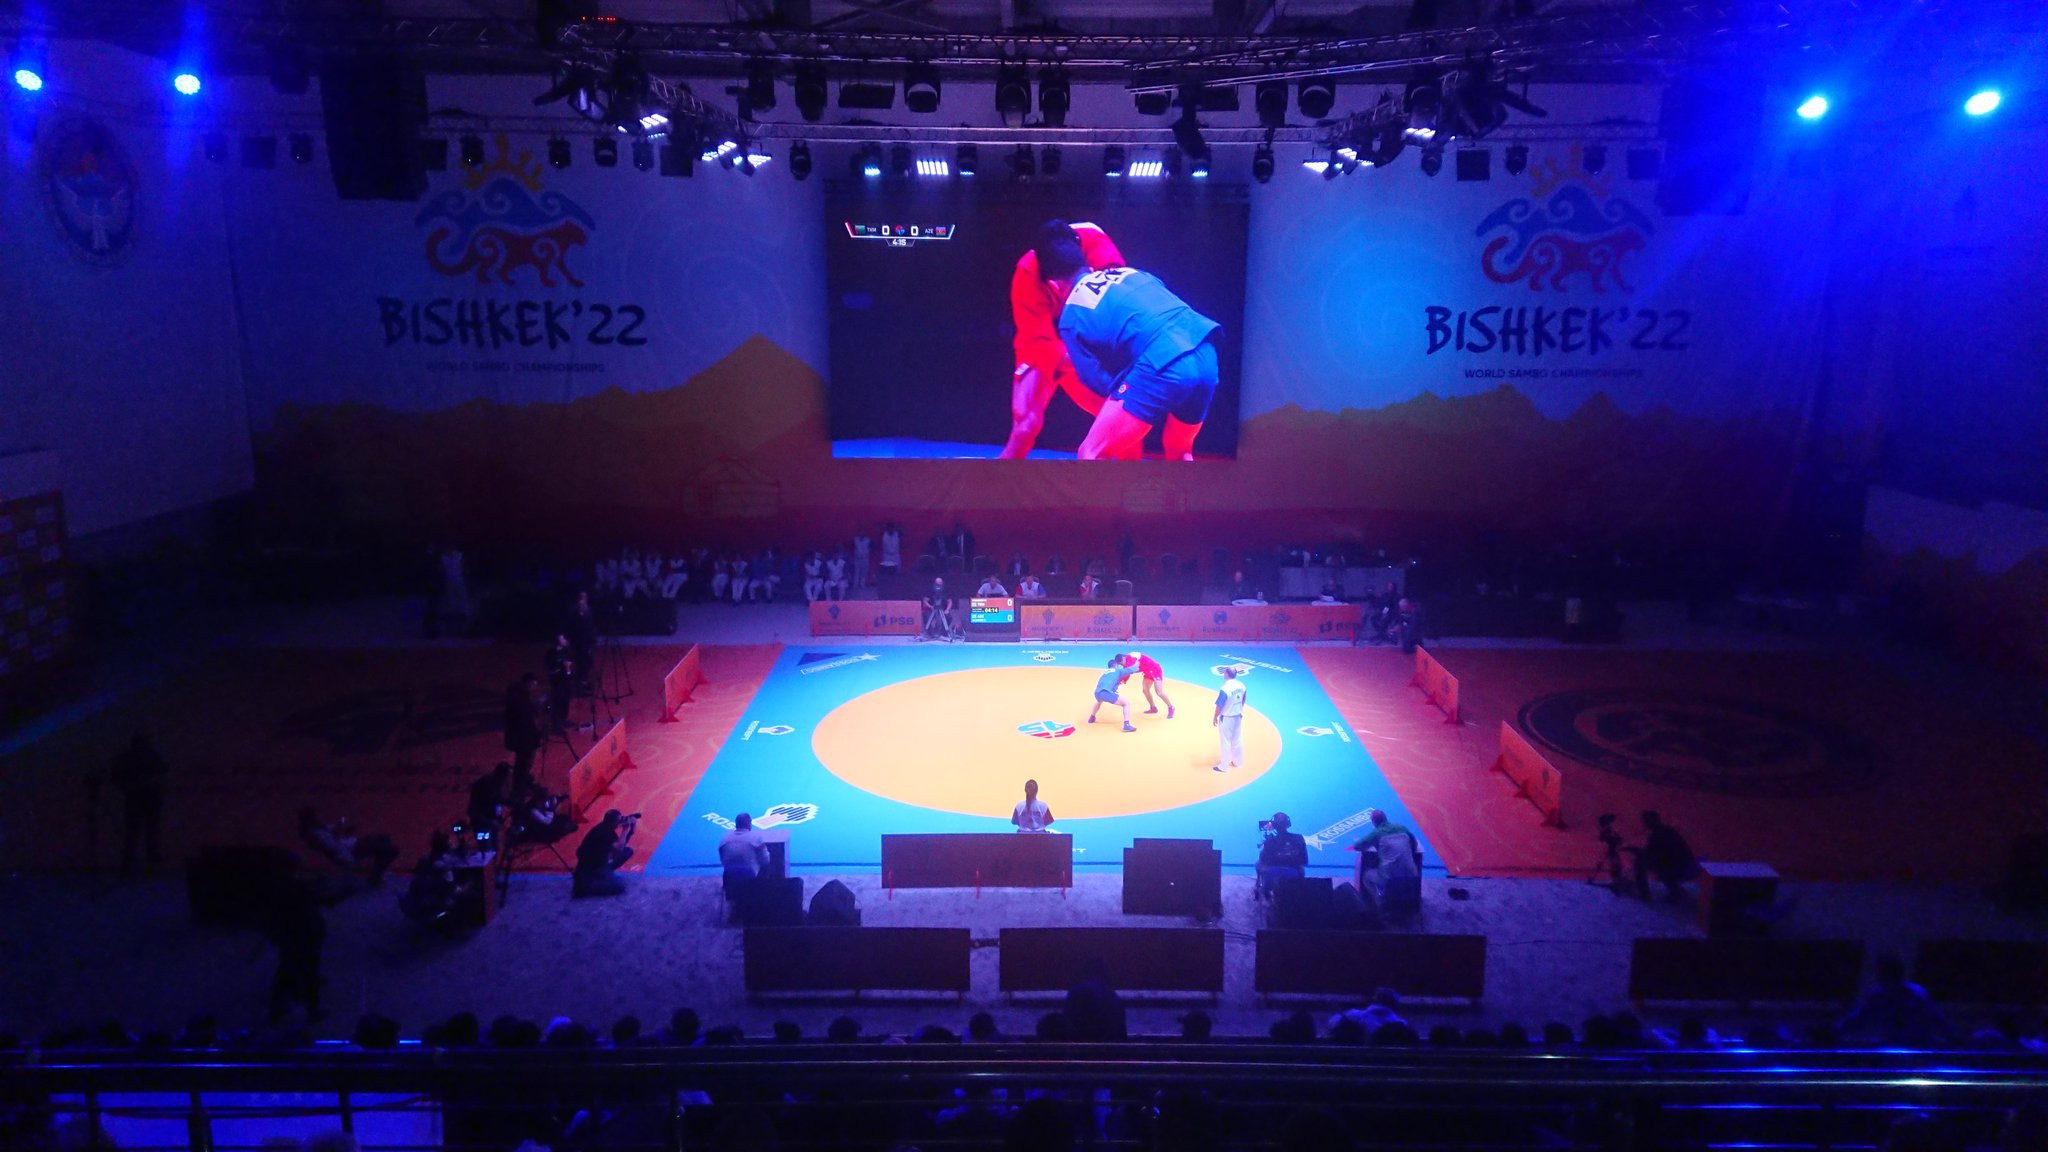 insidethegames is reporting LIVE from the FIAS World Sambo Championships in Bishkek